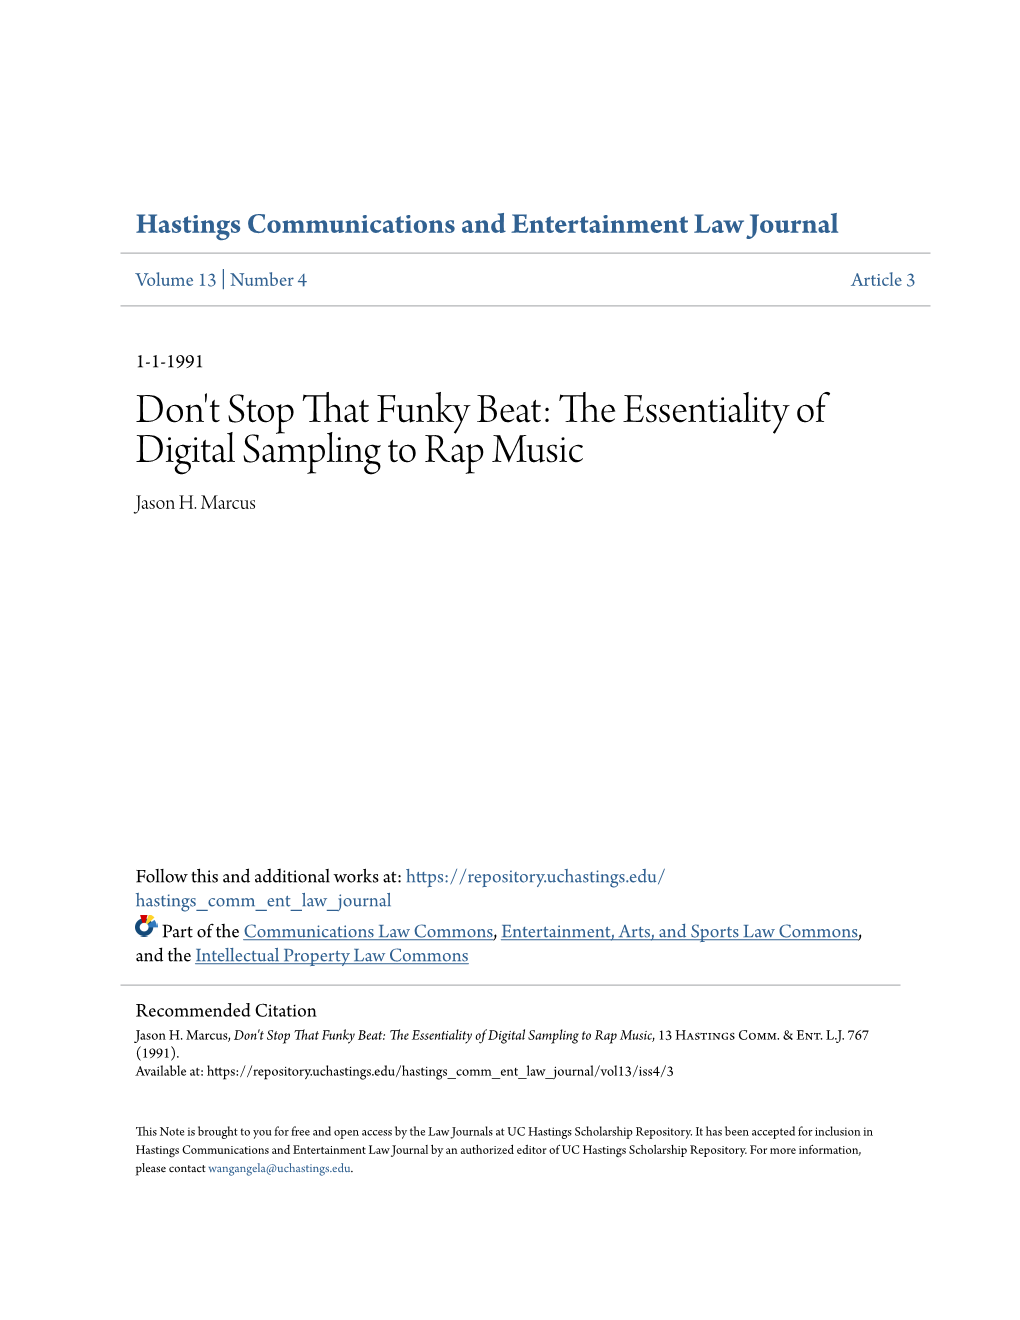 The Essentiality of Digital Sampling to Rap Music Jason H